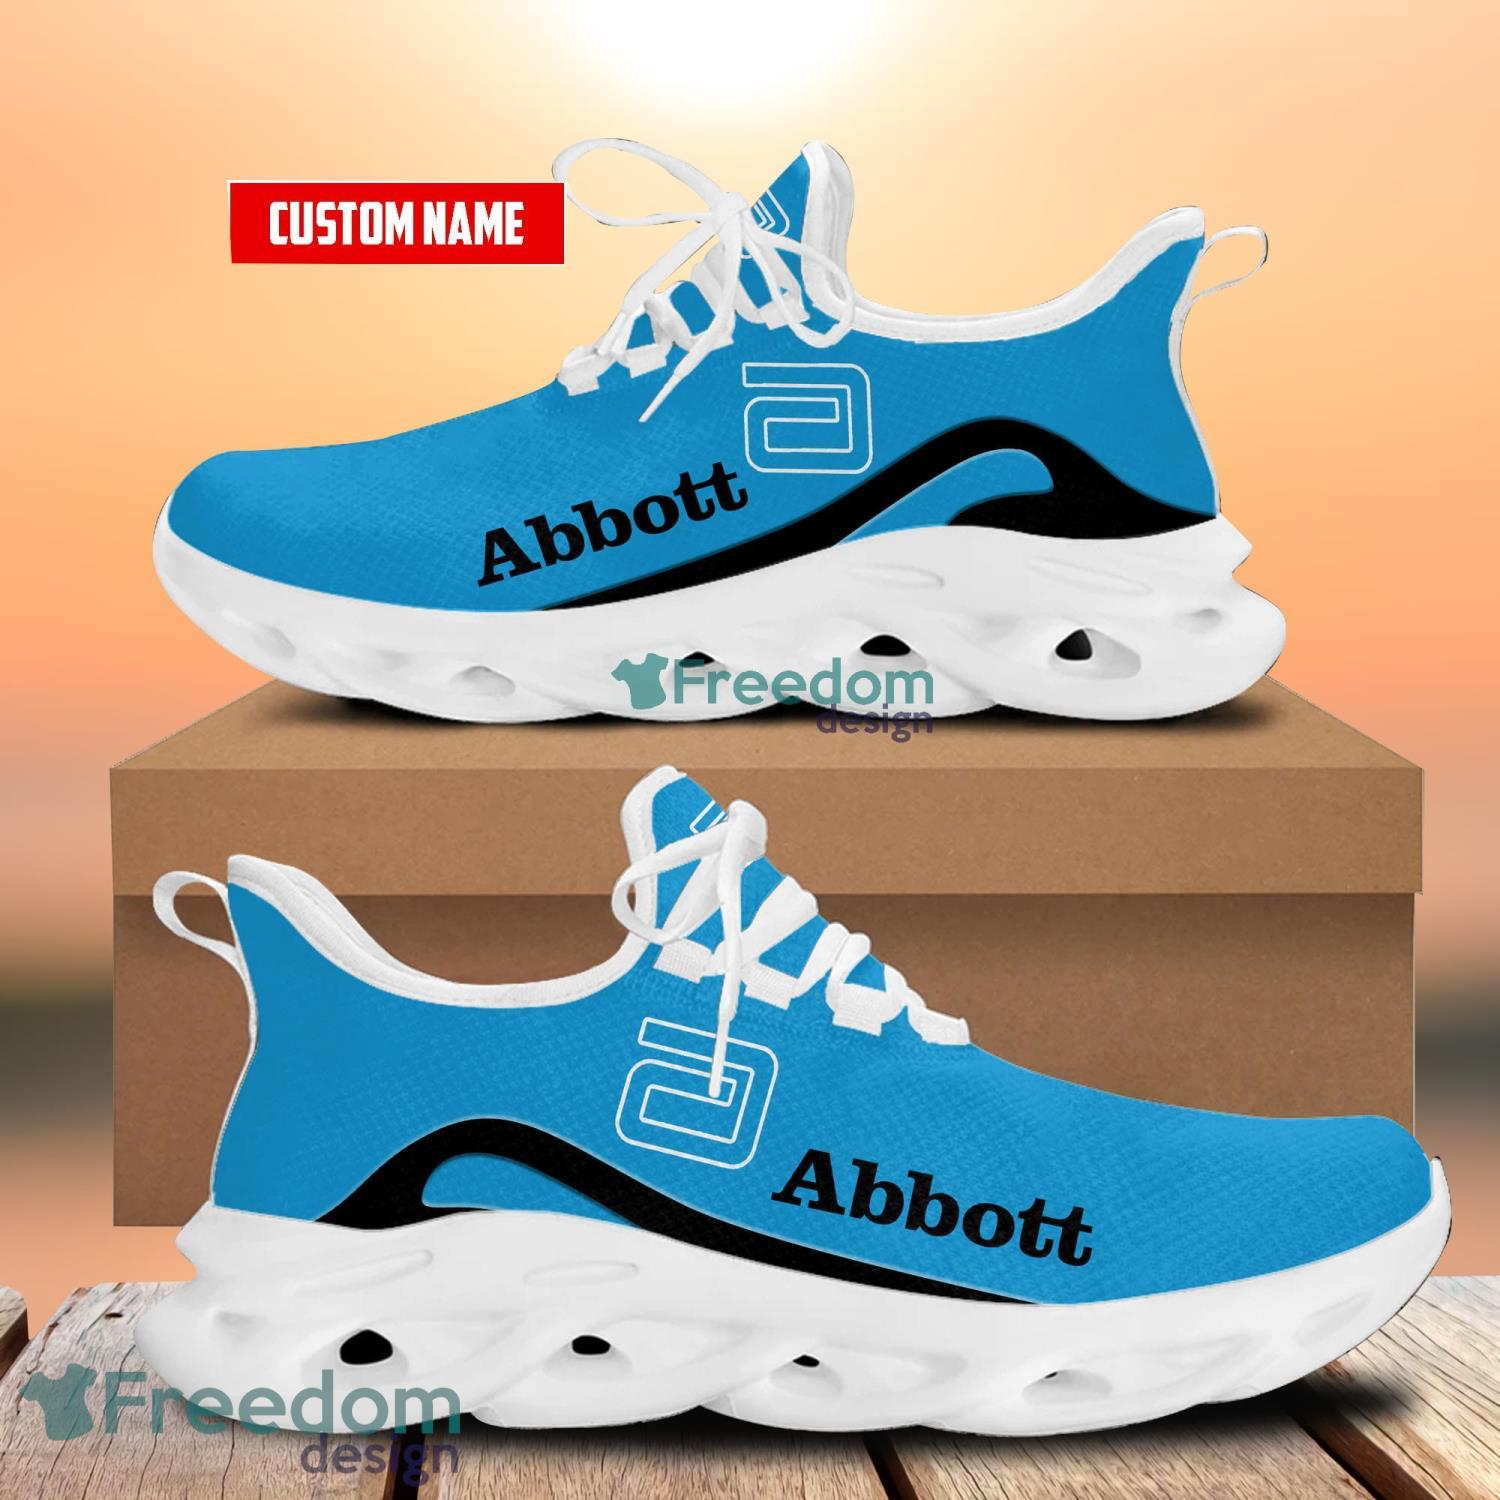 Abbott Shoes